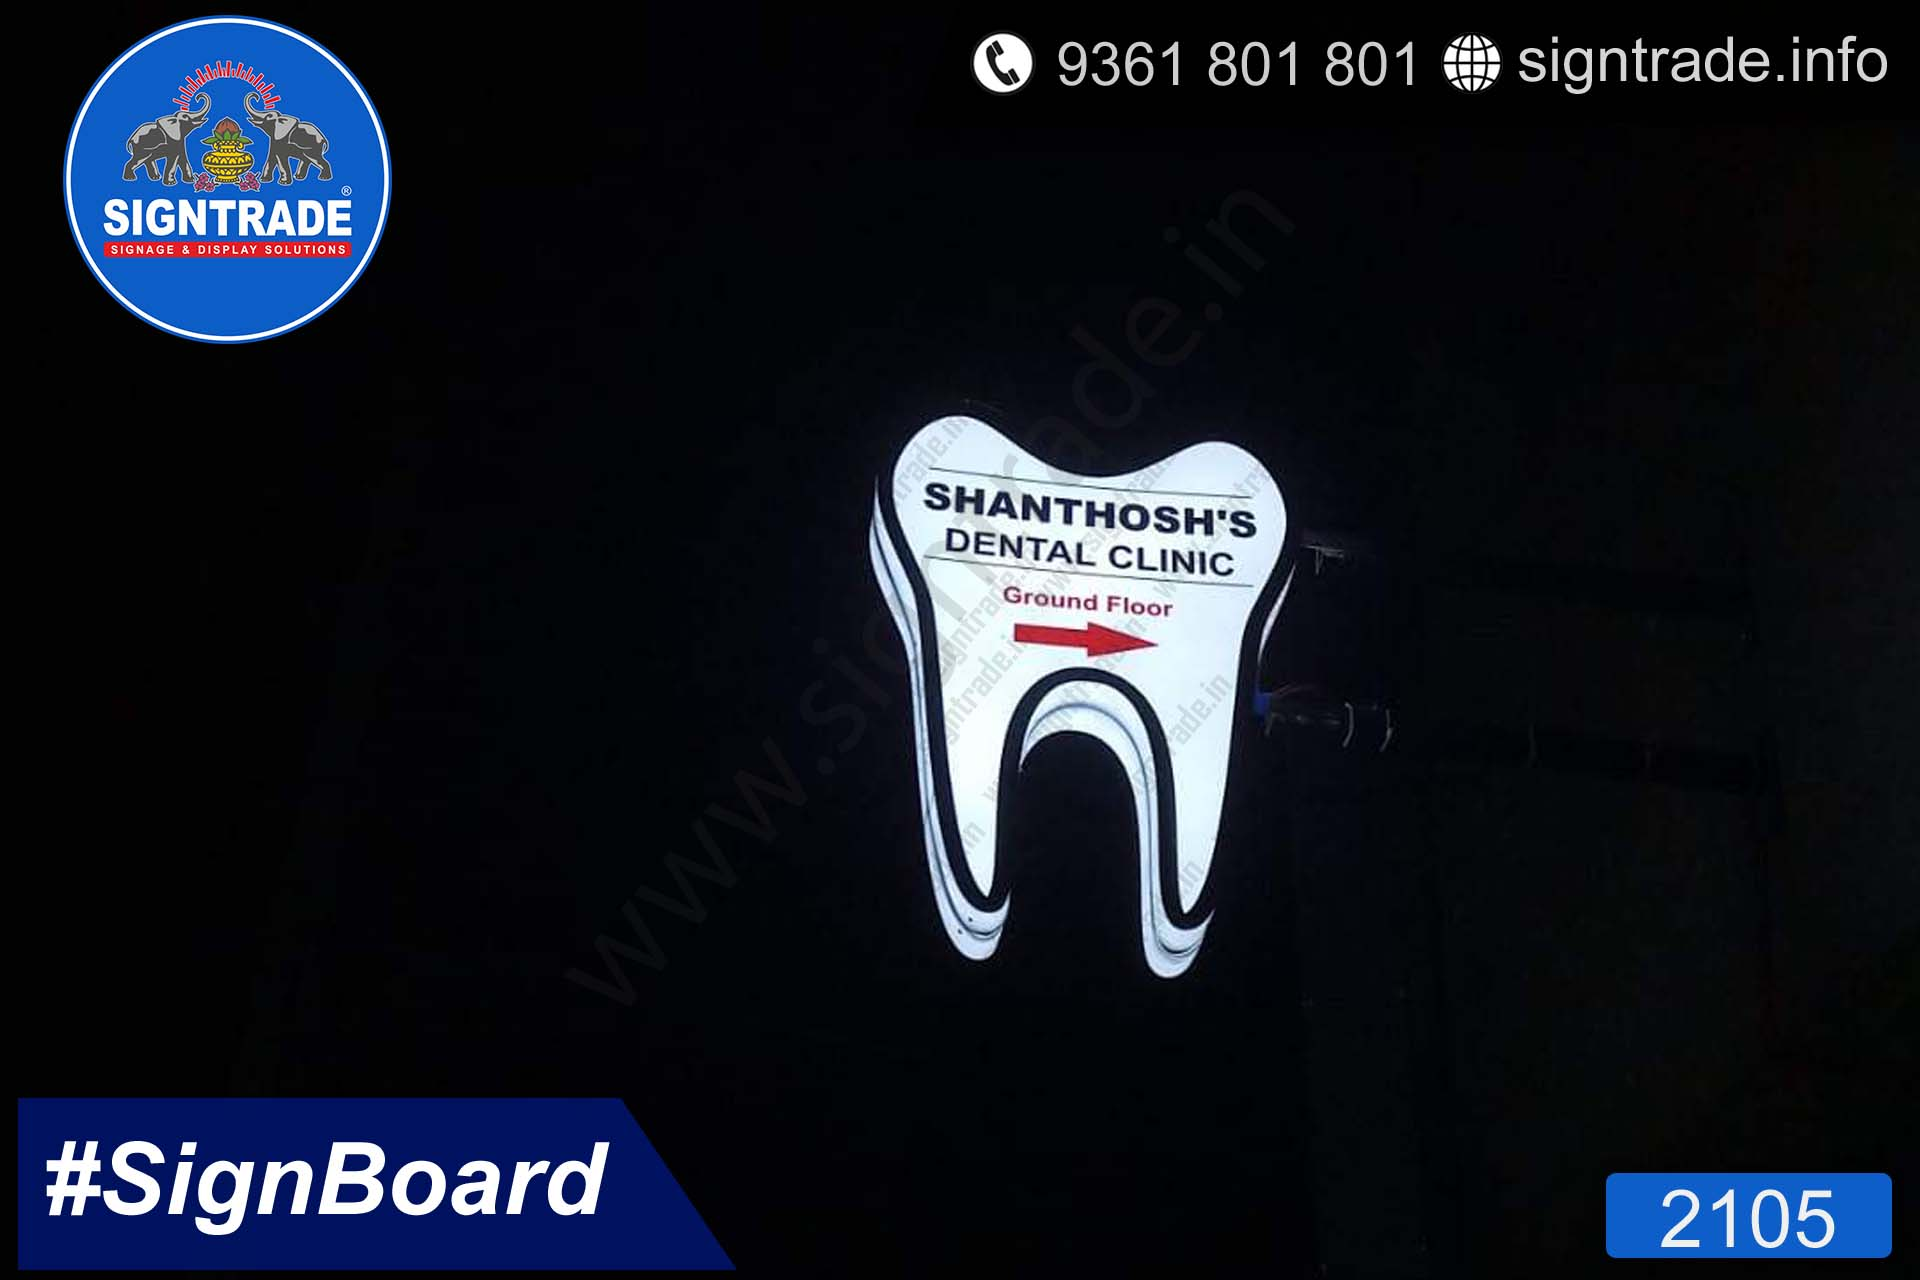 Shanthosh's Dental Clinic Sign Board